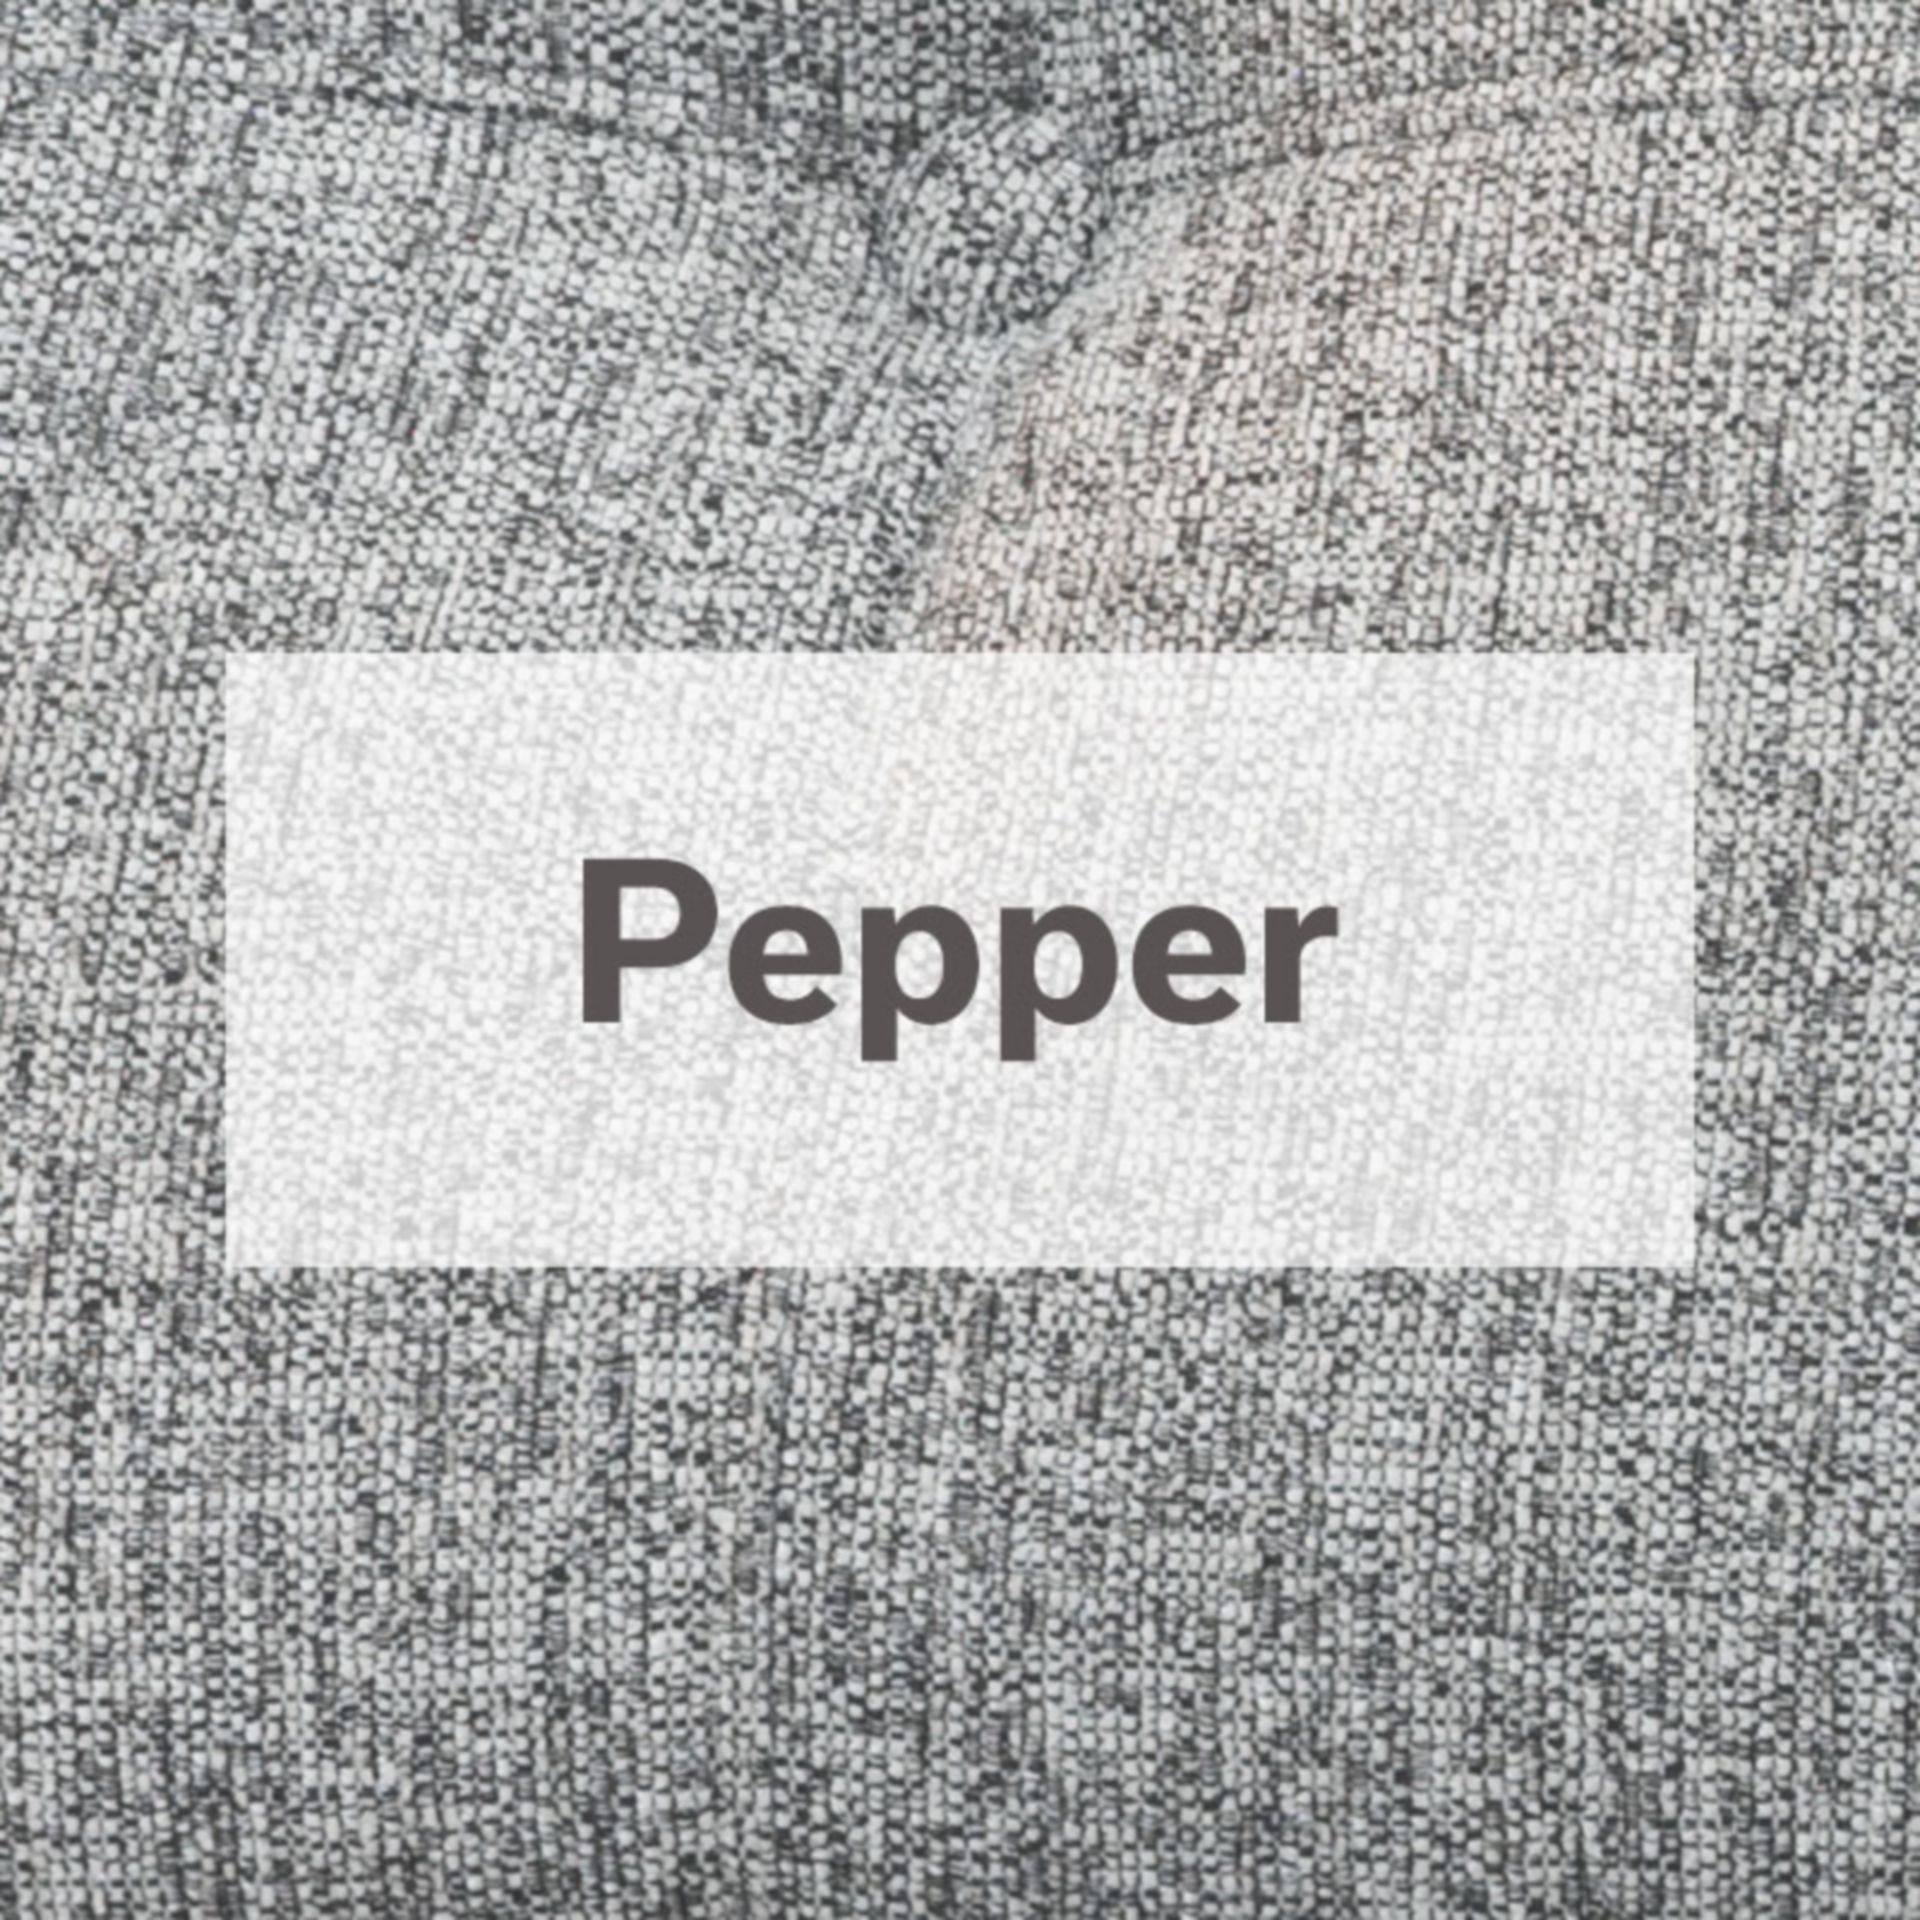 Trinity pepper colored fabric